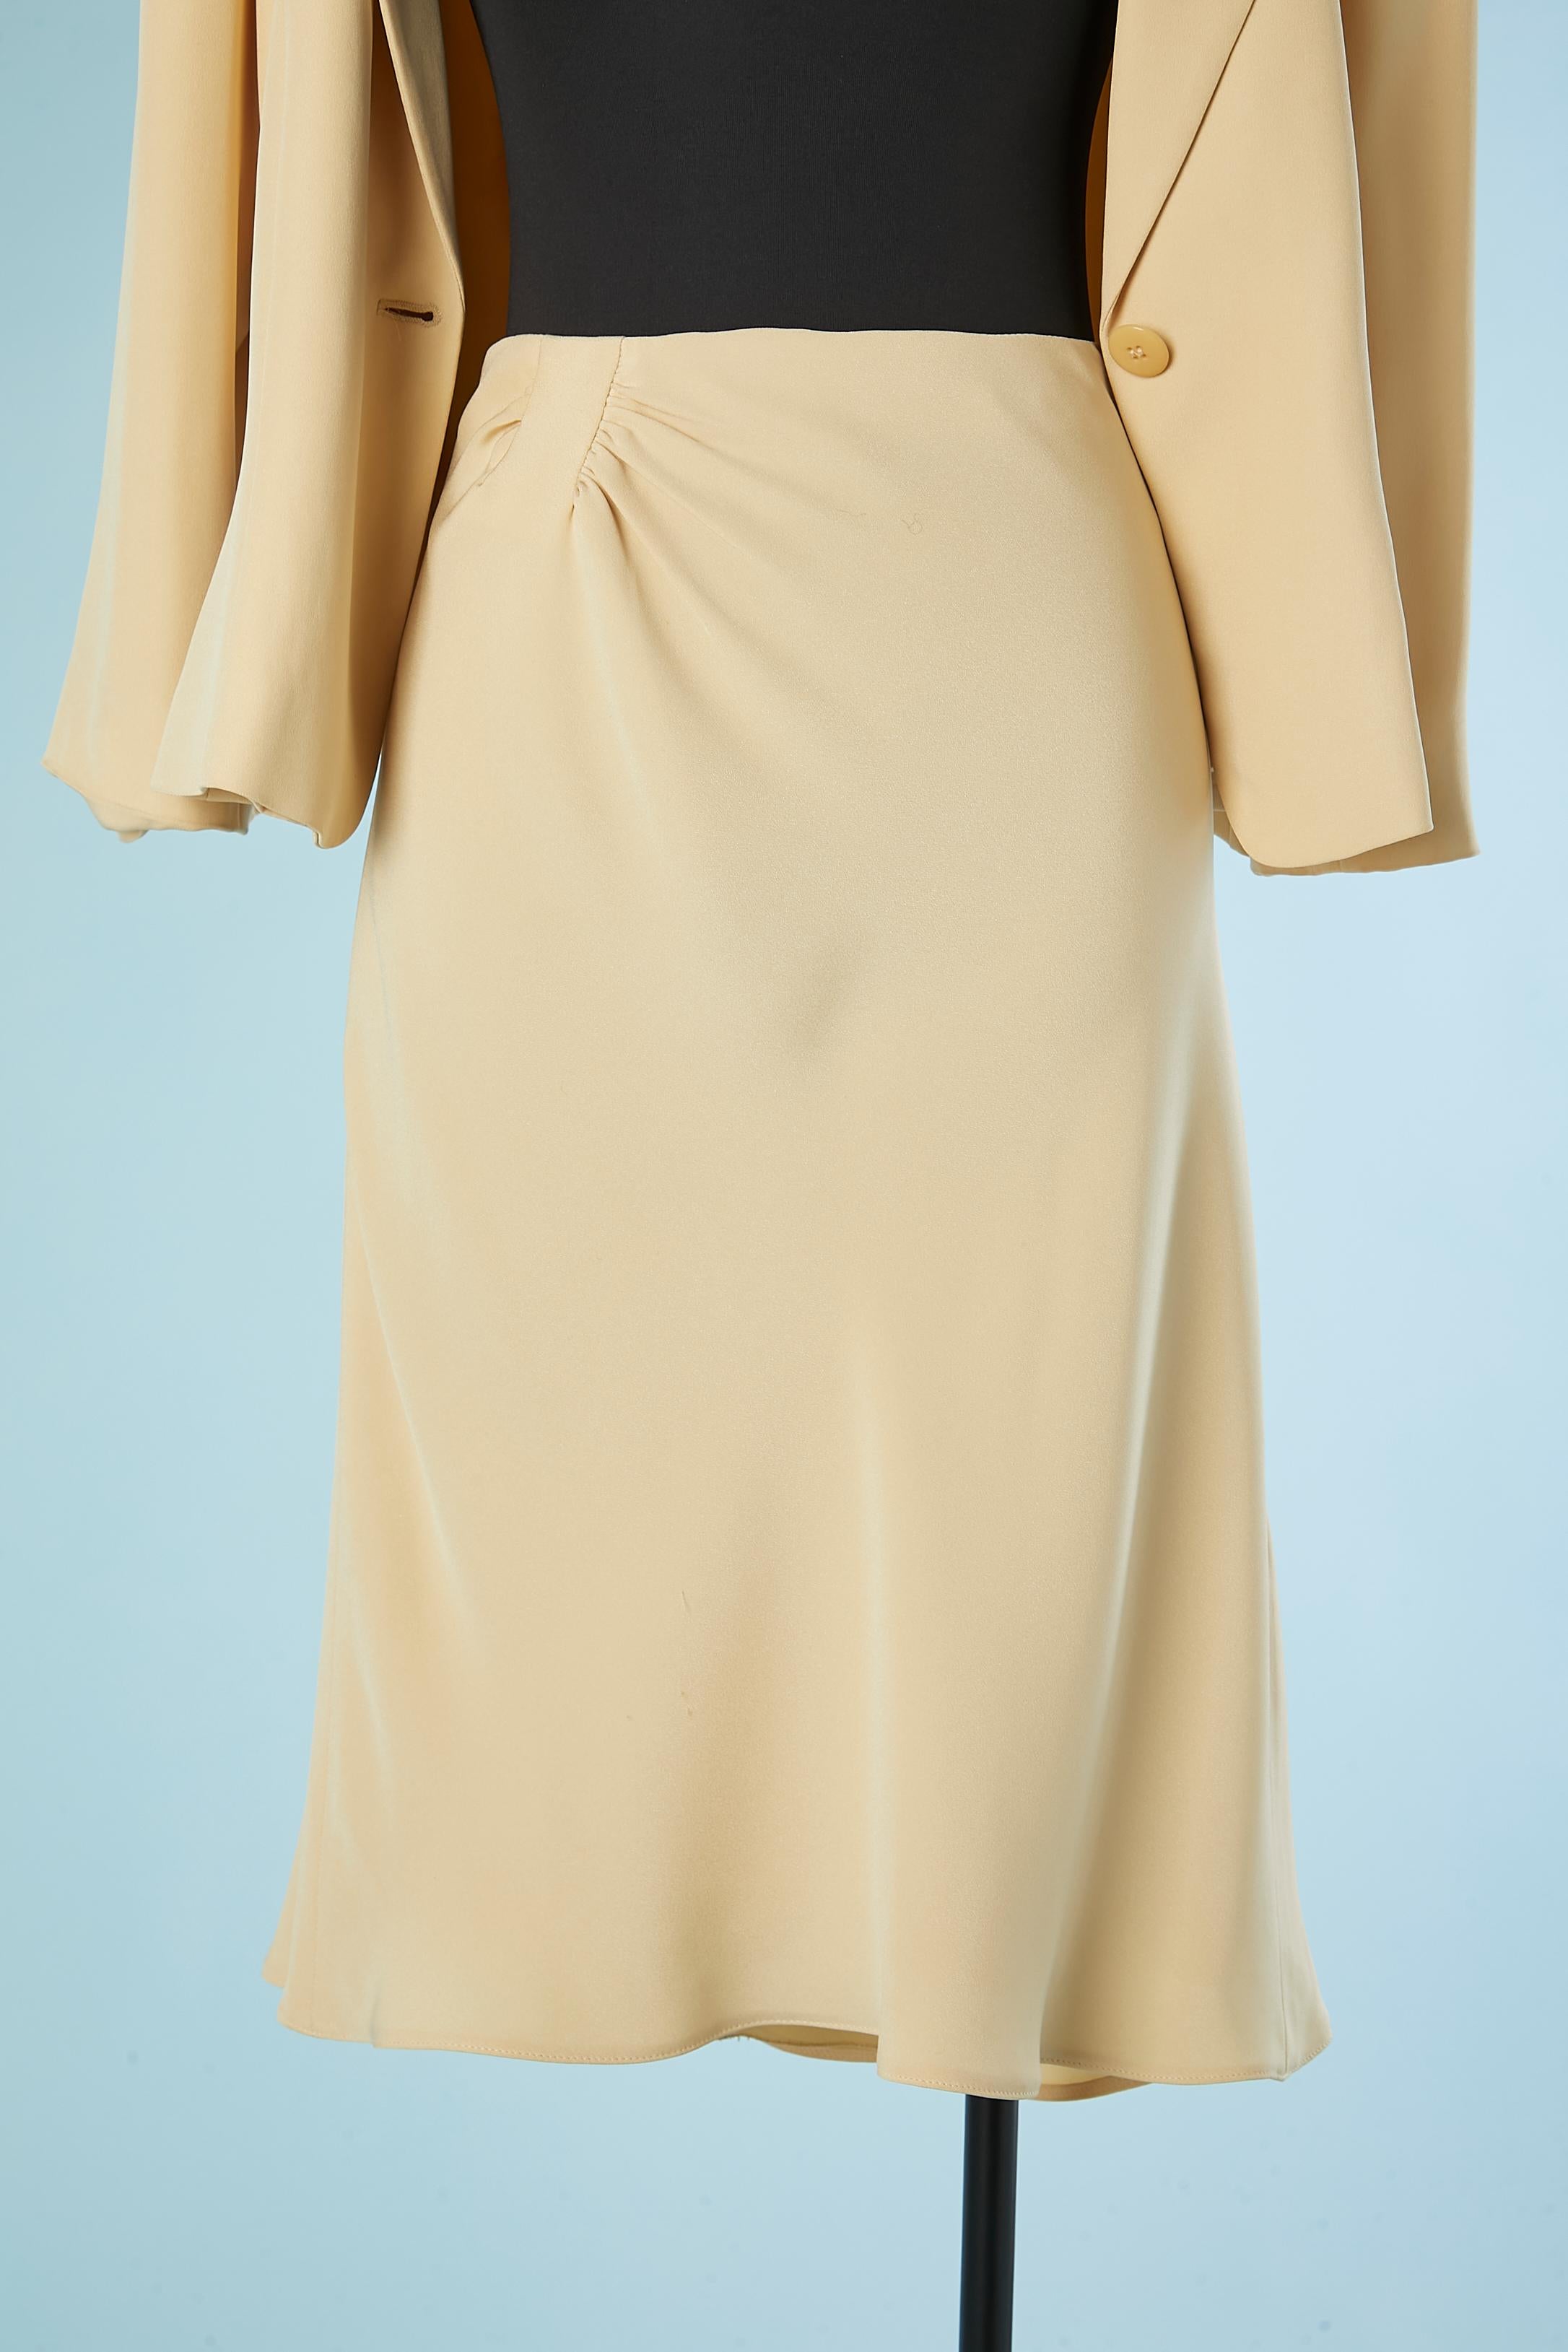 Beige silk and acetate skirt suit Armani Collezioni  For Sale 1